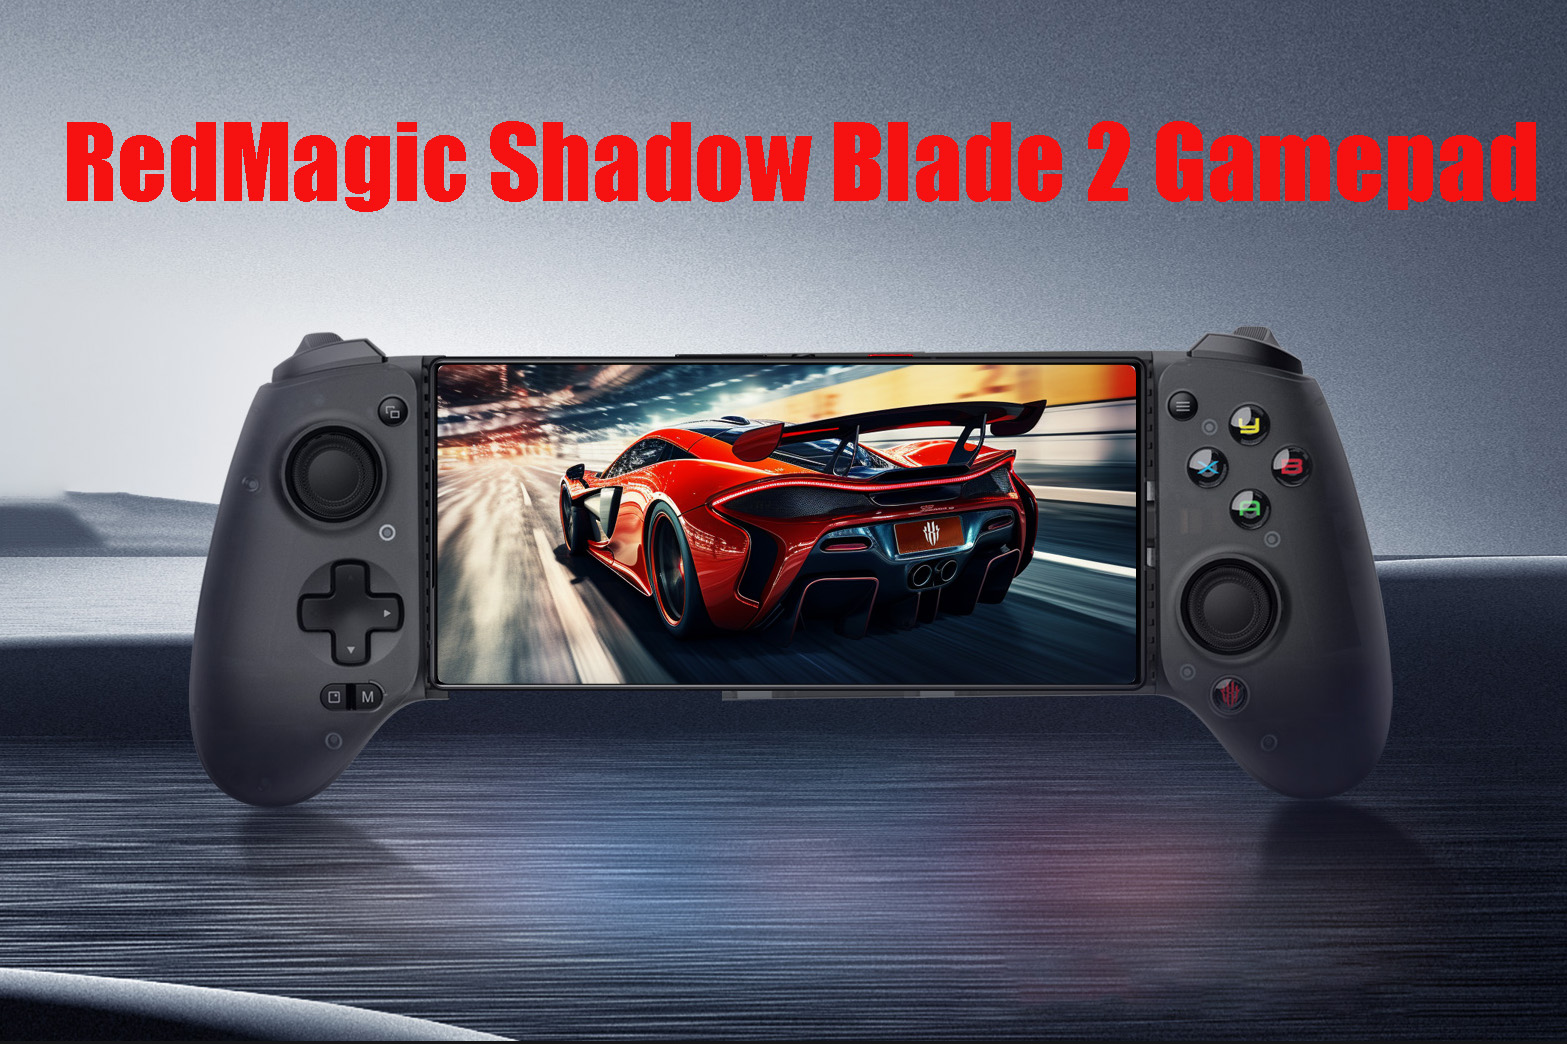 RedMagic Shadow Blade 2 Gamepad Review